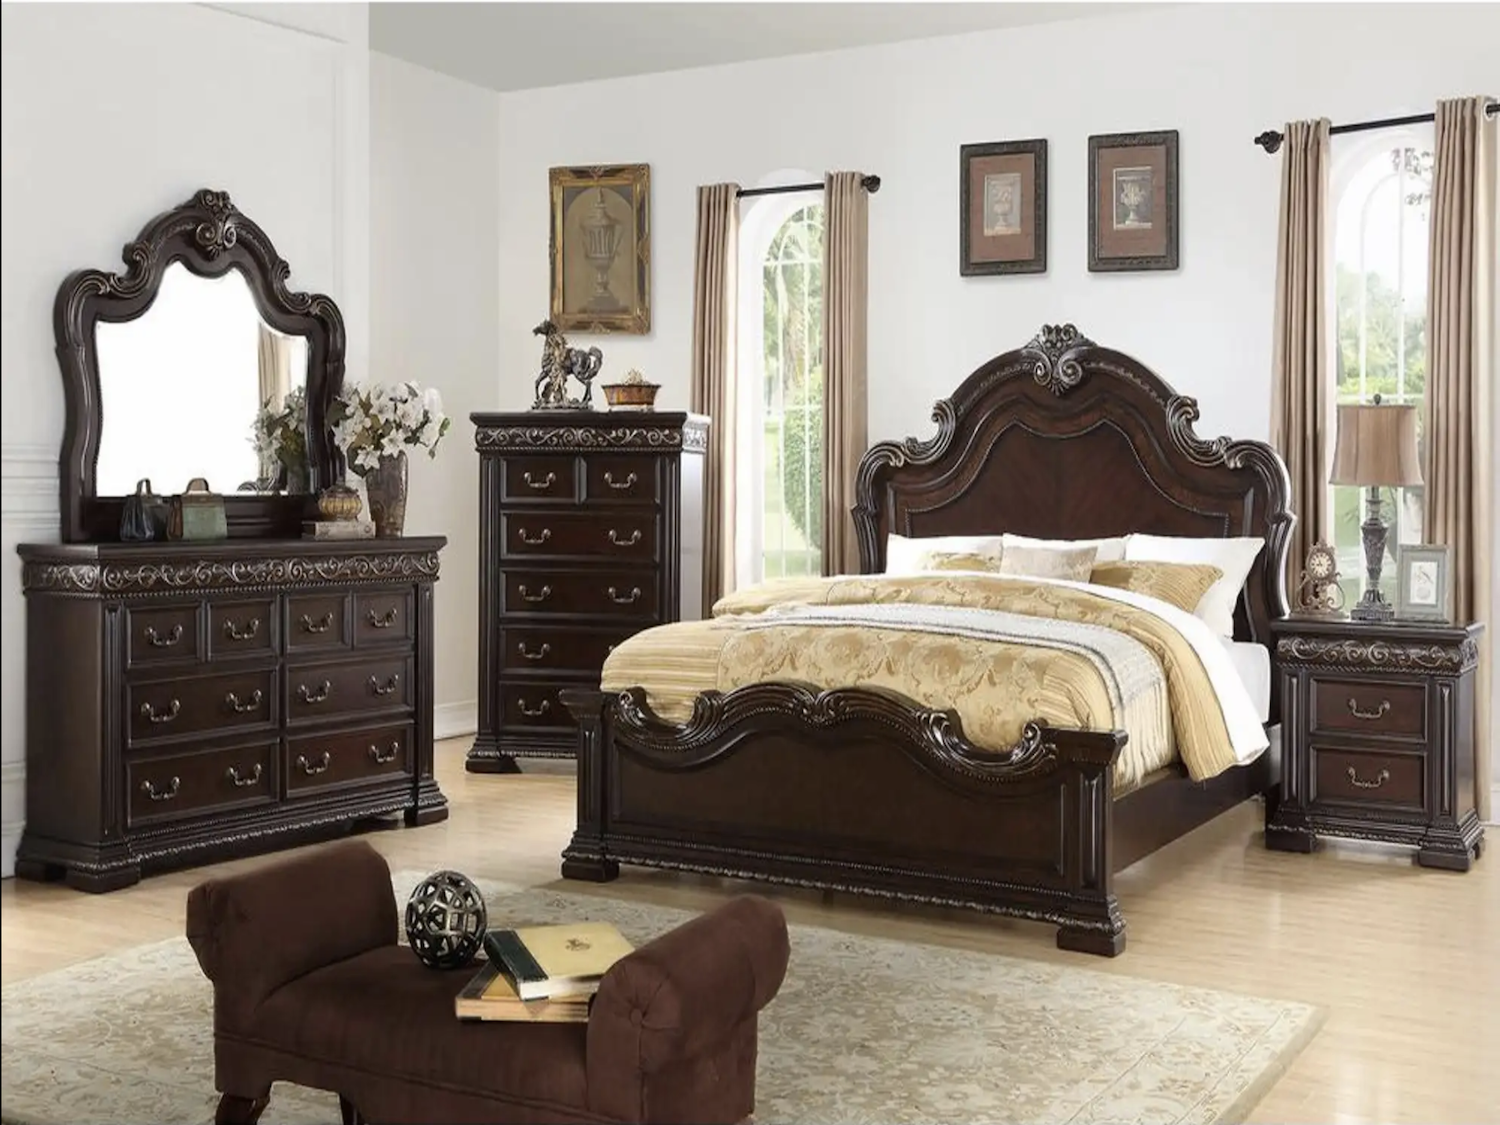 eldorado bedroom furniture set